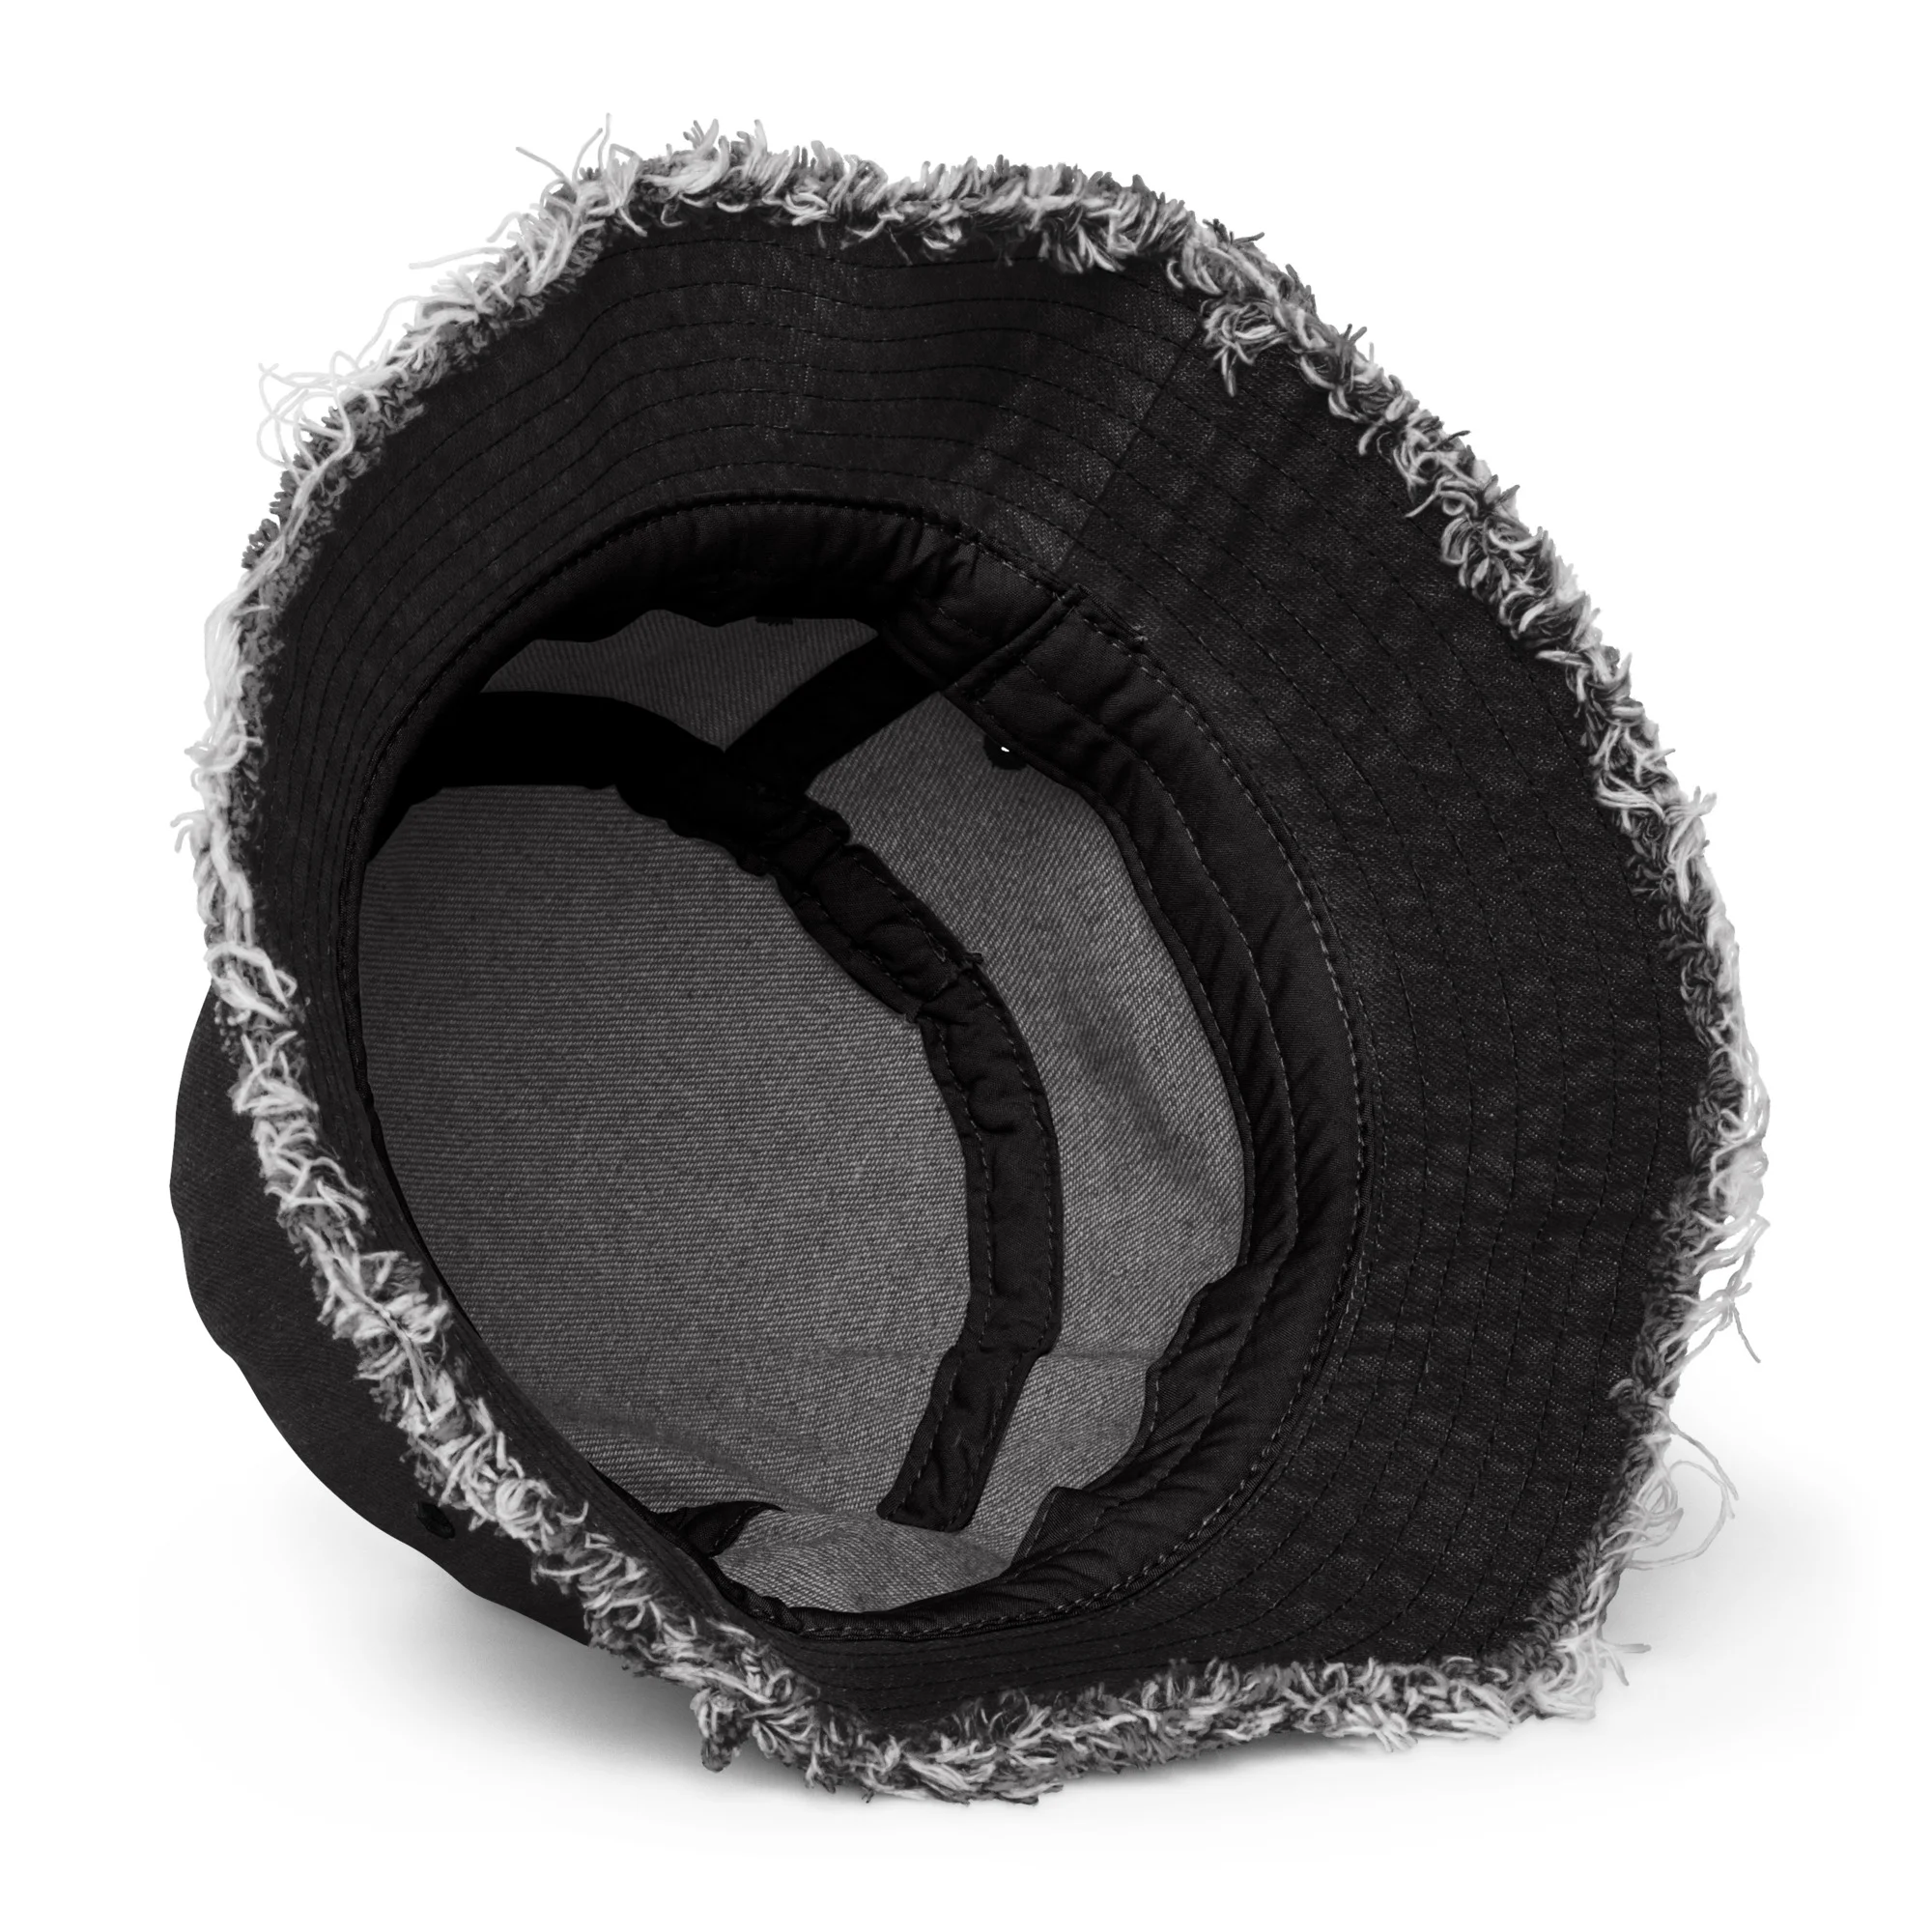 Wild Distressed Black Denim Bucket Hats